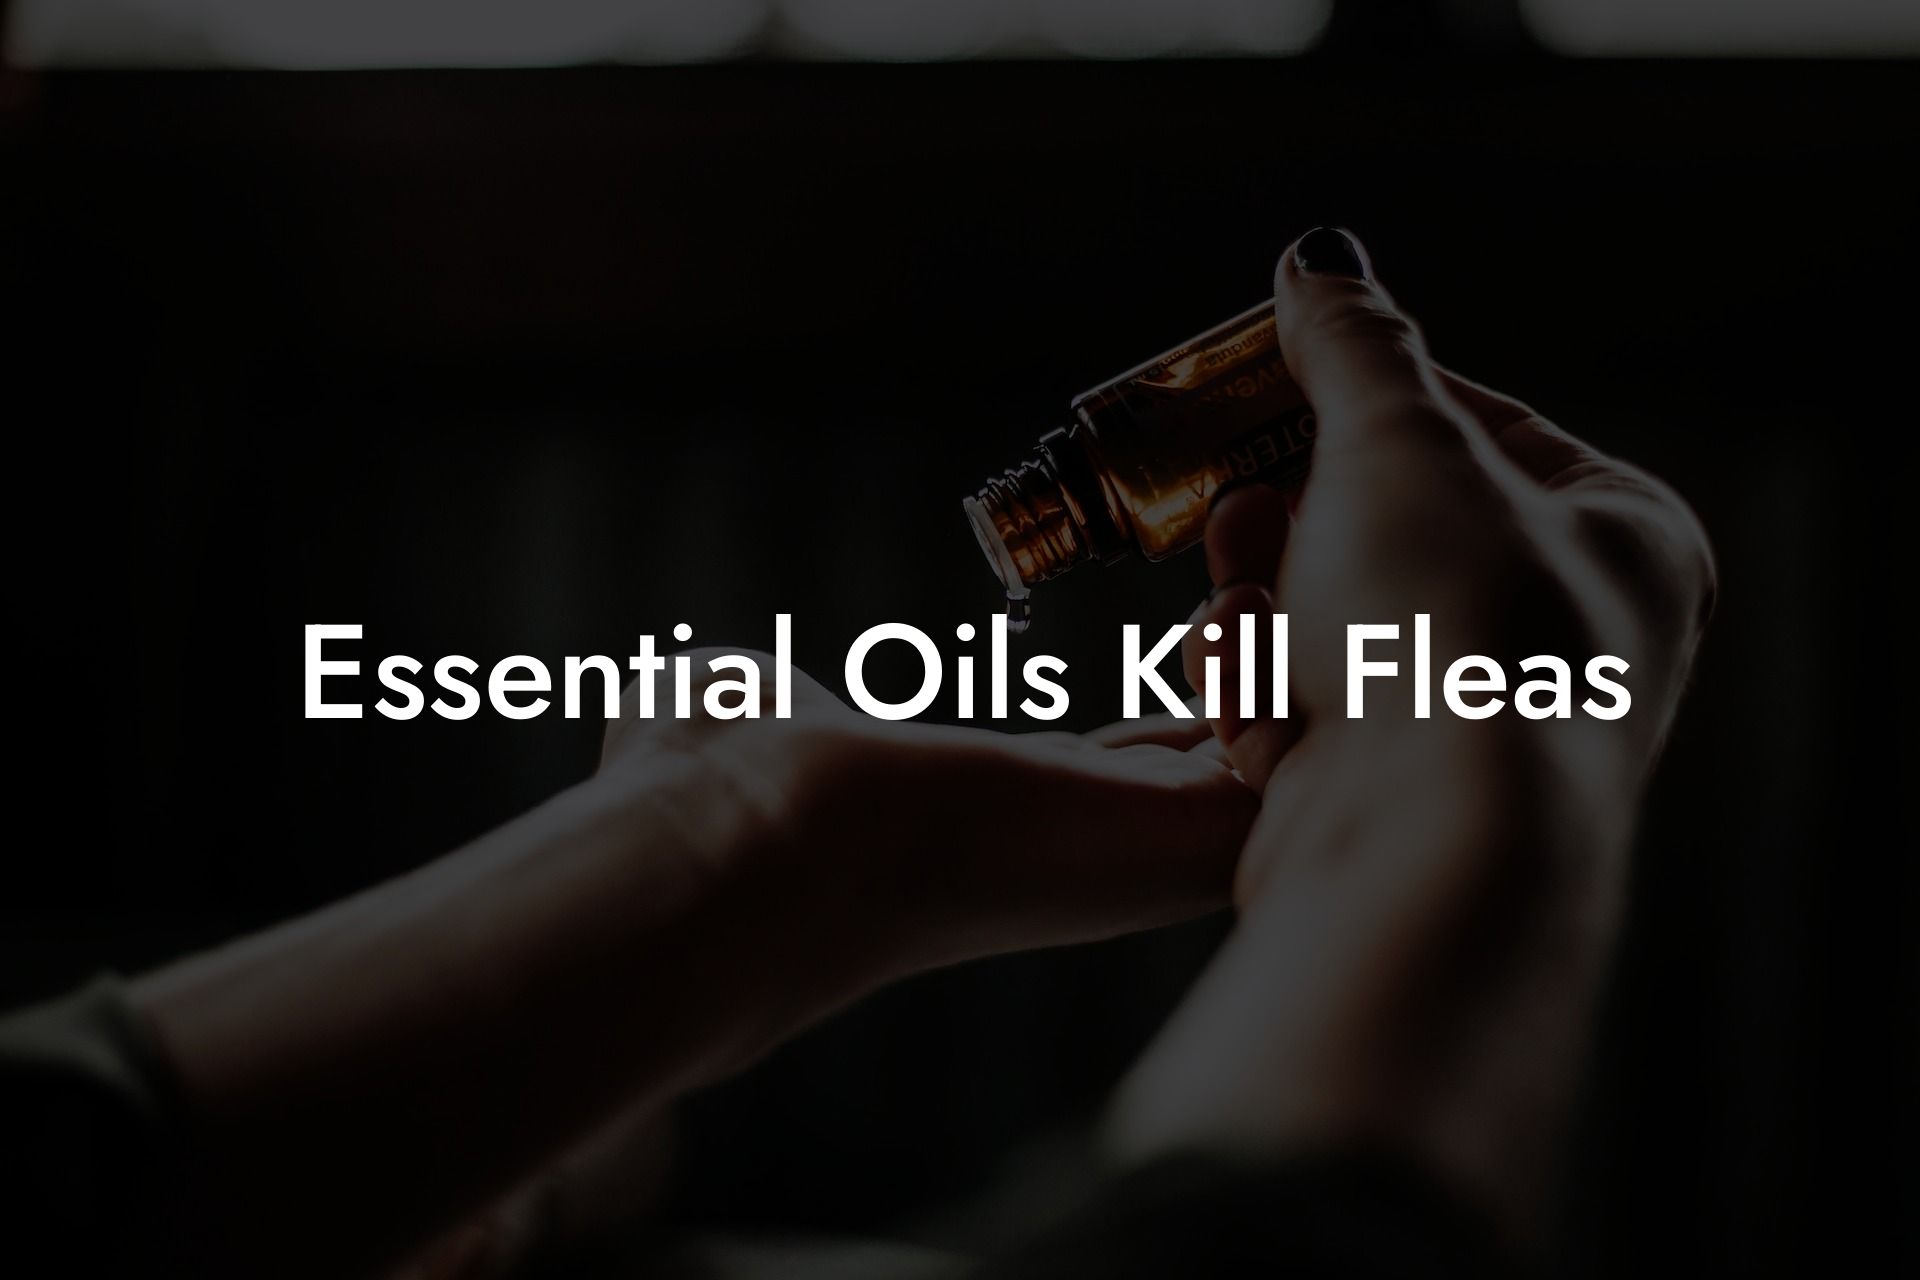 Essential Oils Kill Fleas